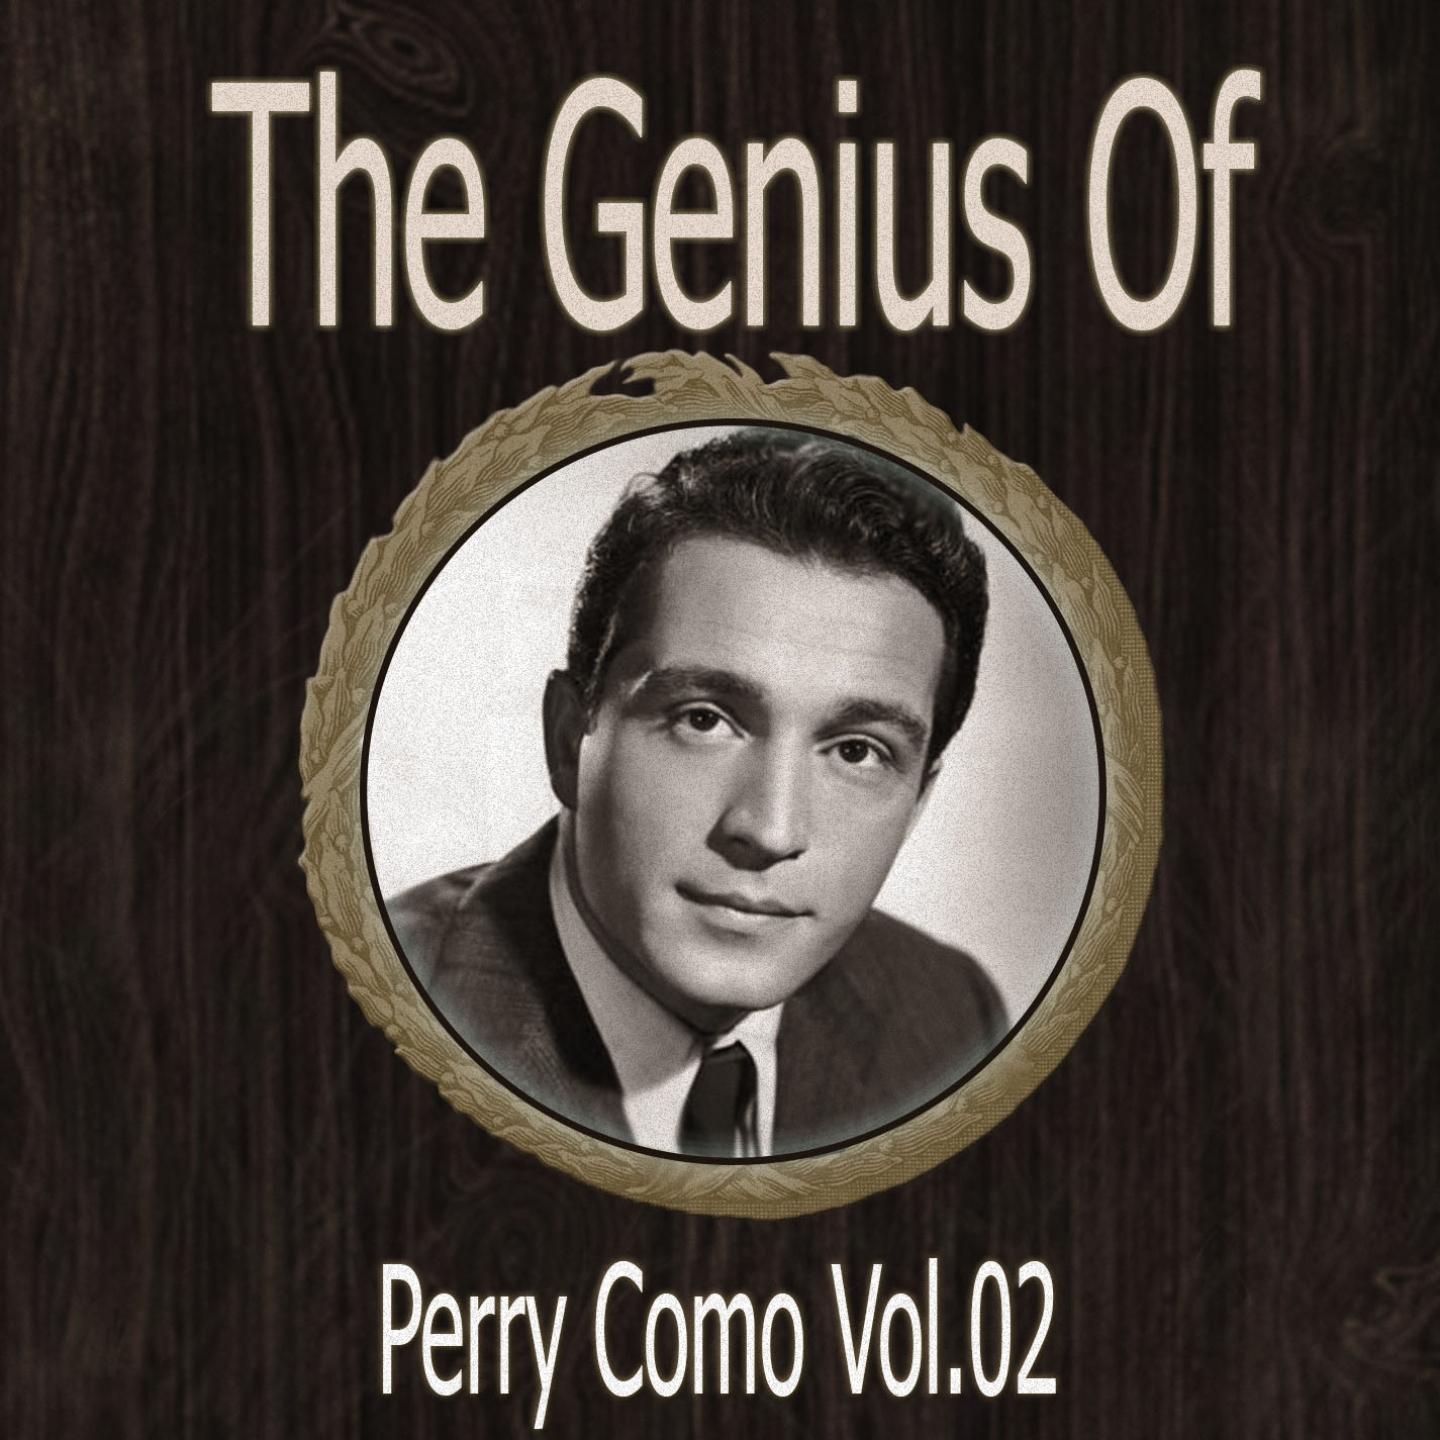 The Genius of Perry Como Vol 02